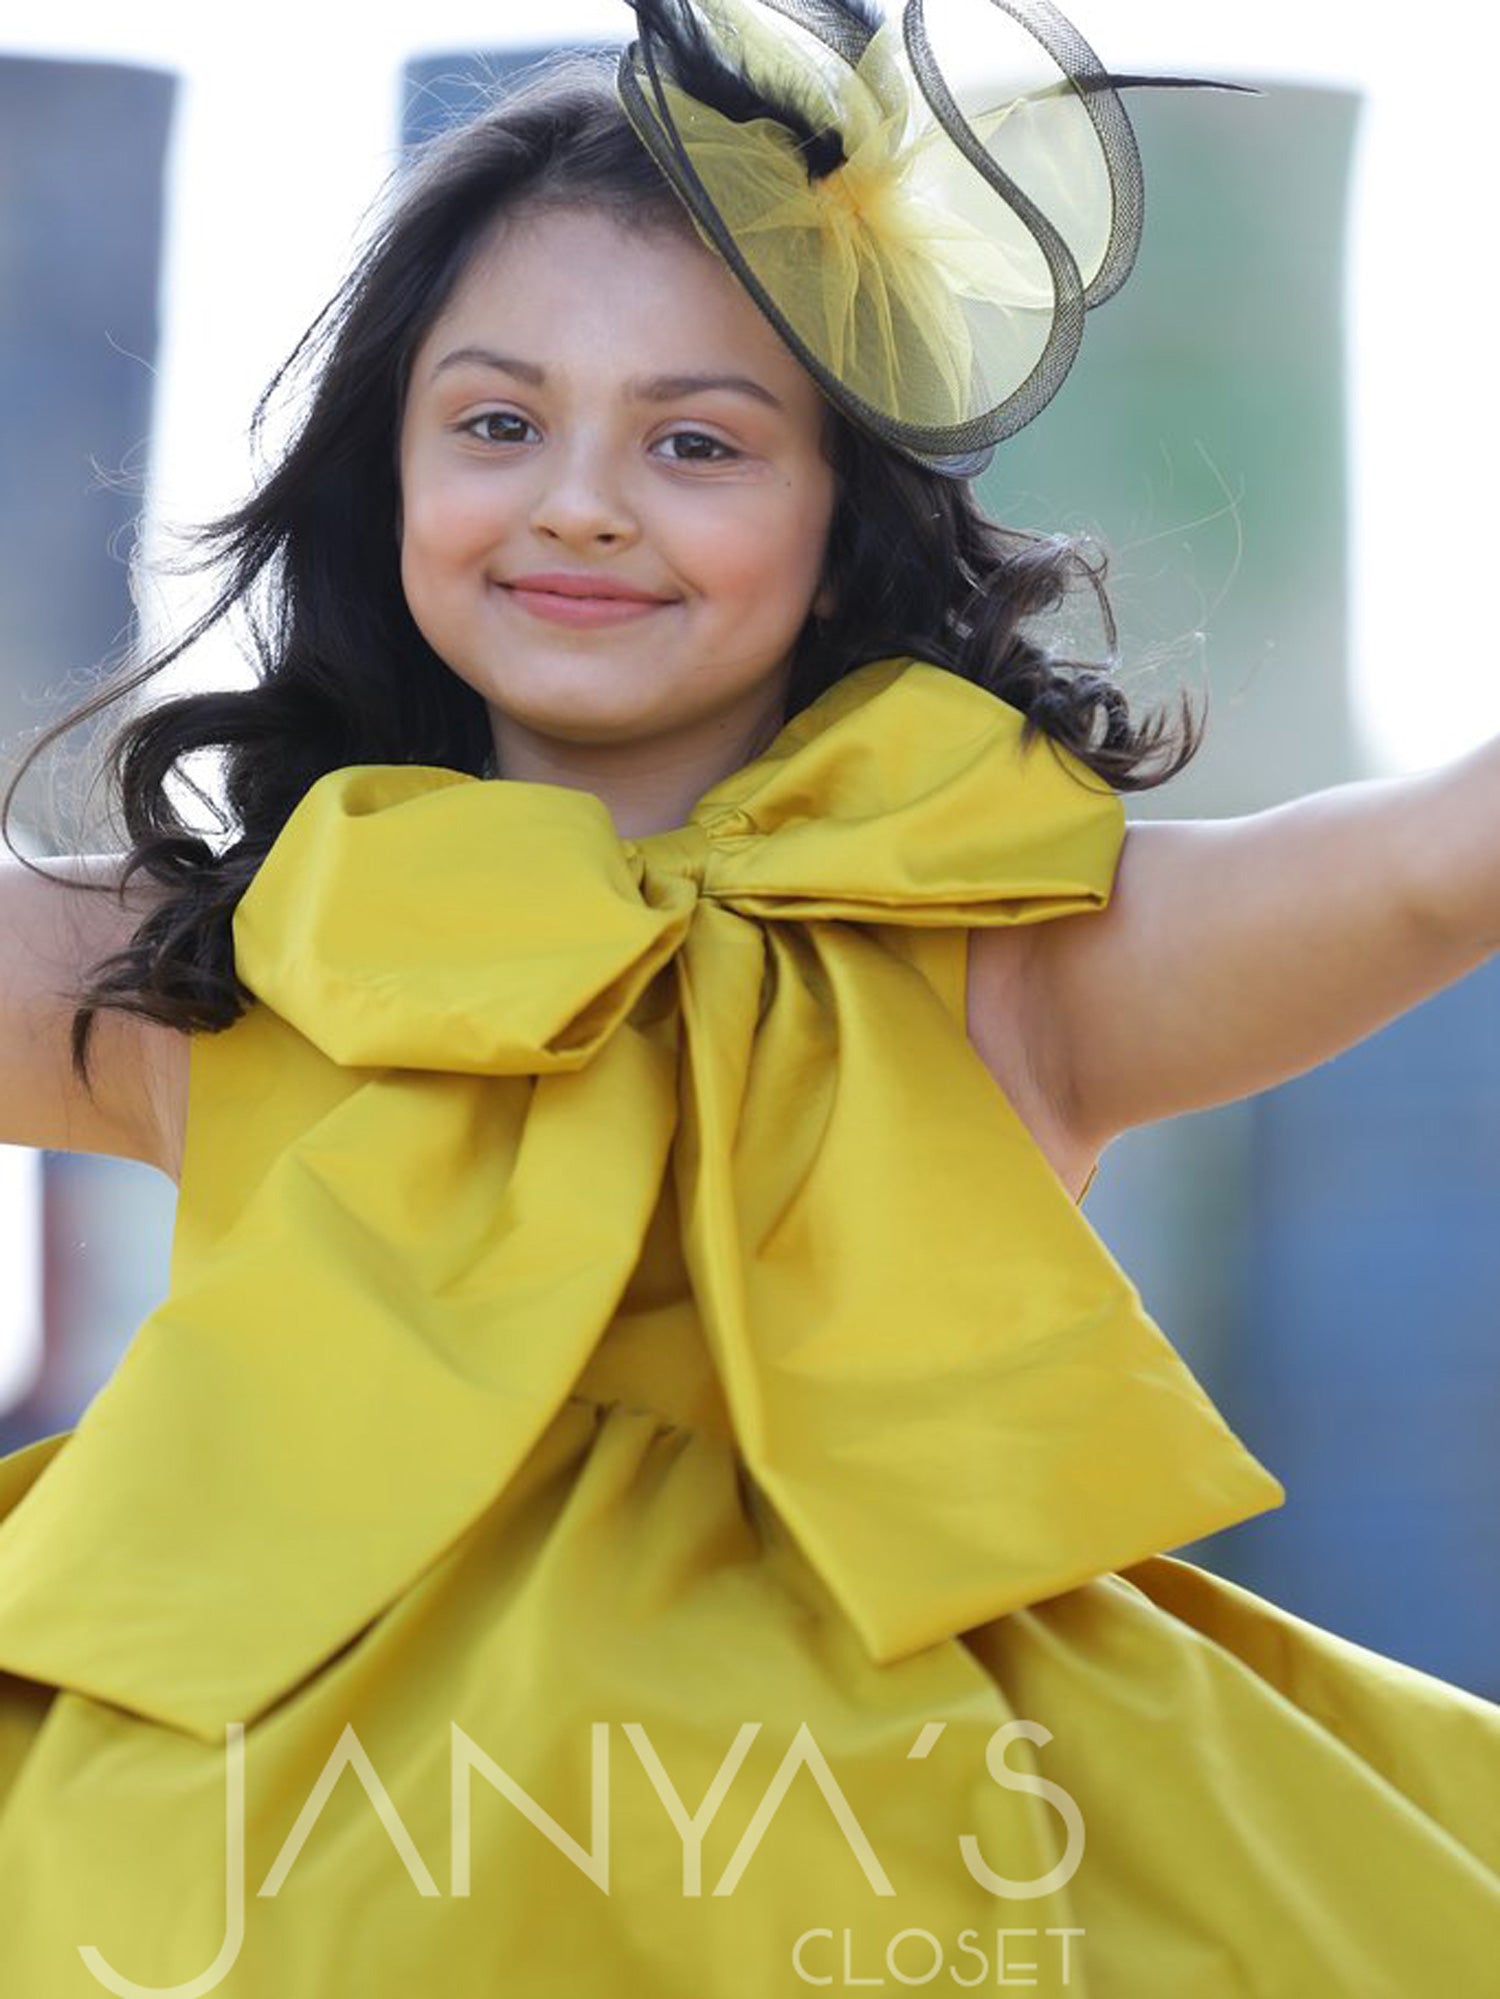 Yellow Taffeta Bow Dress